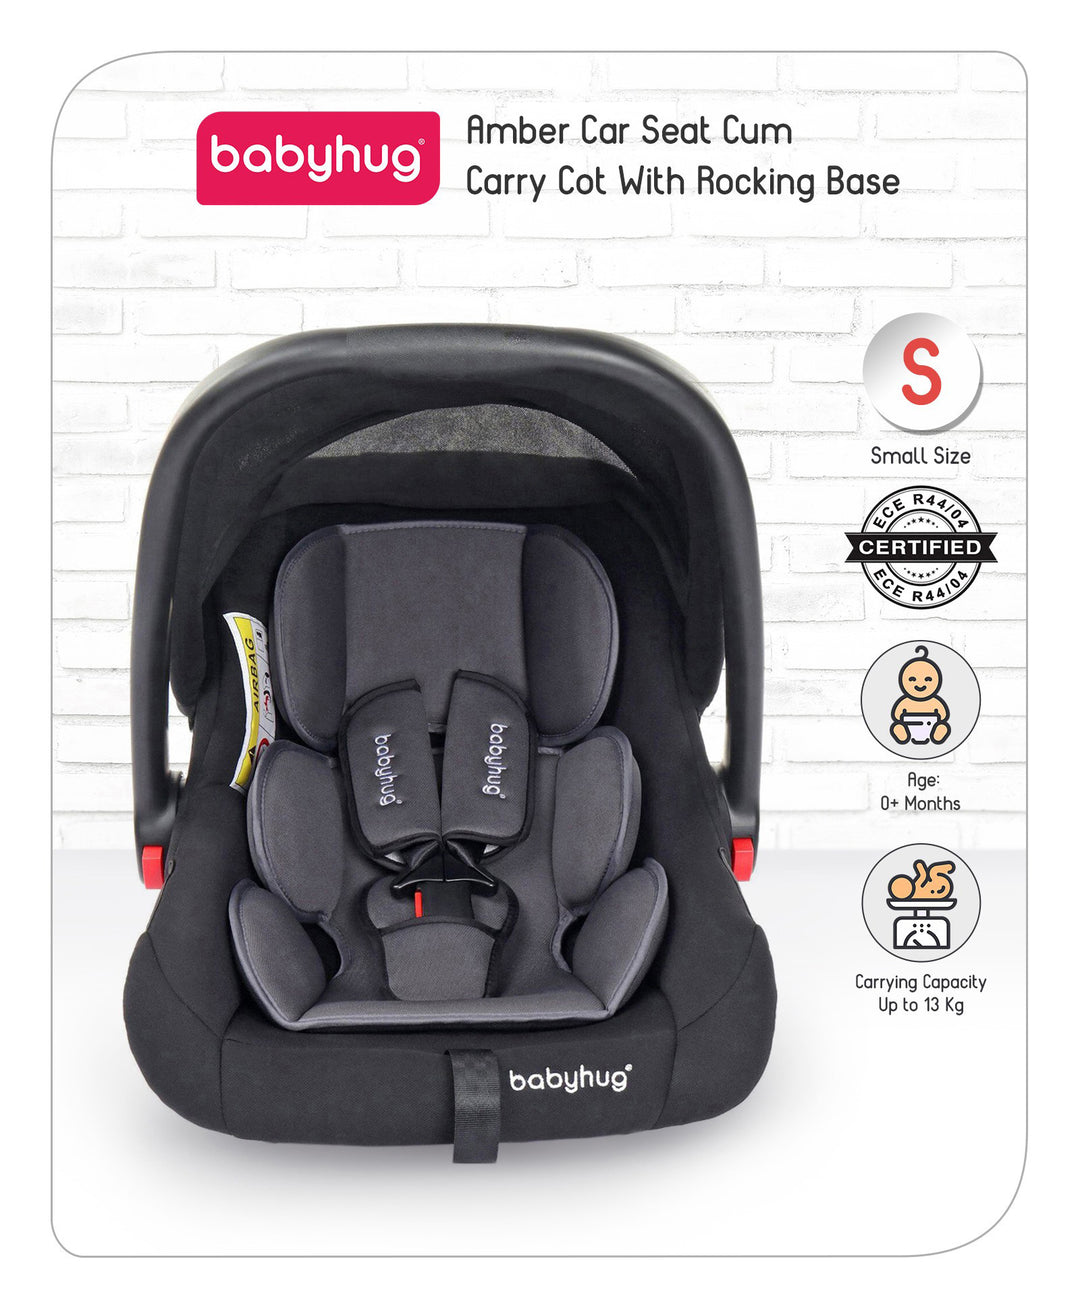 Babyhug Amber Car Seat Cum Carry Cot